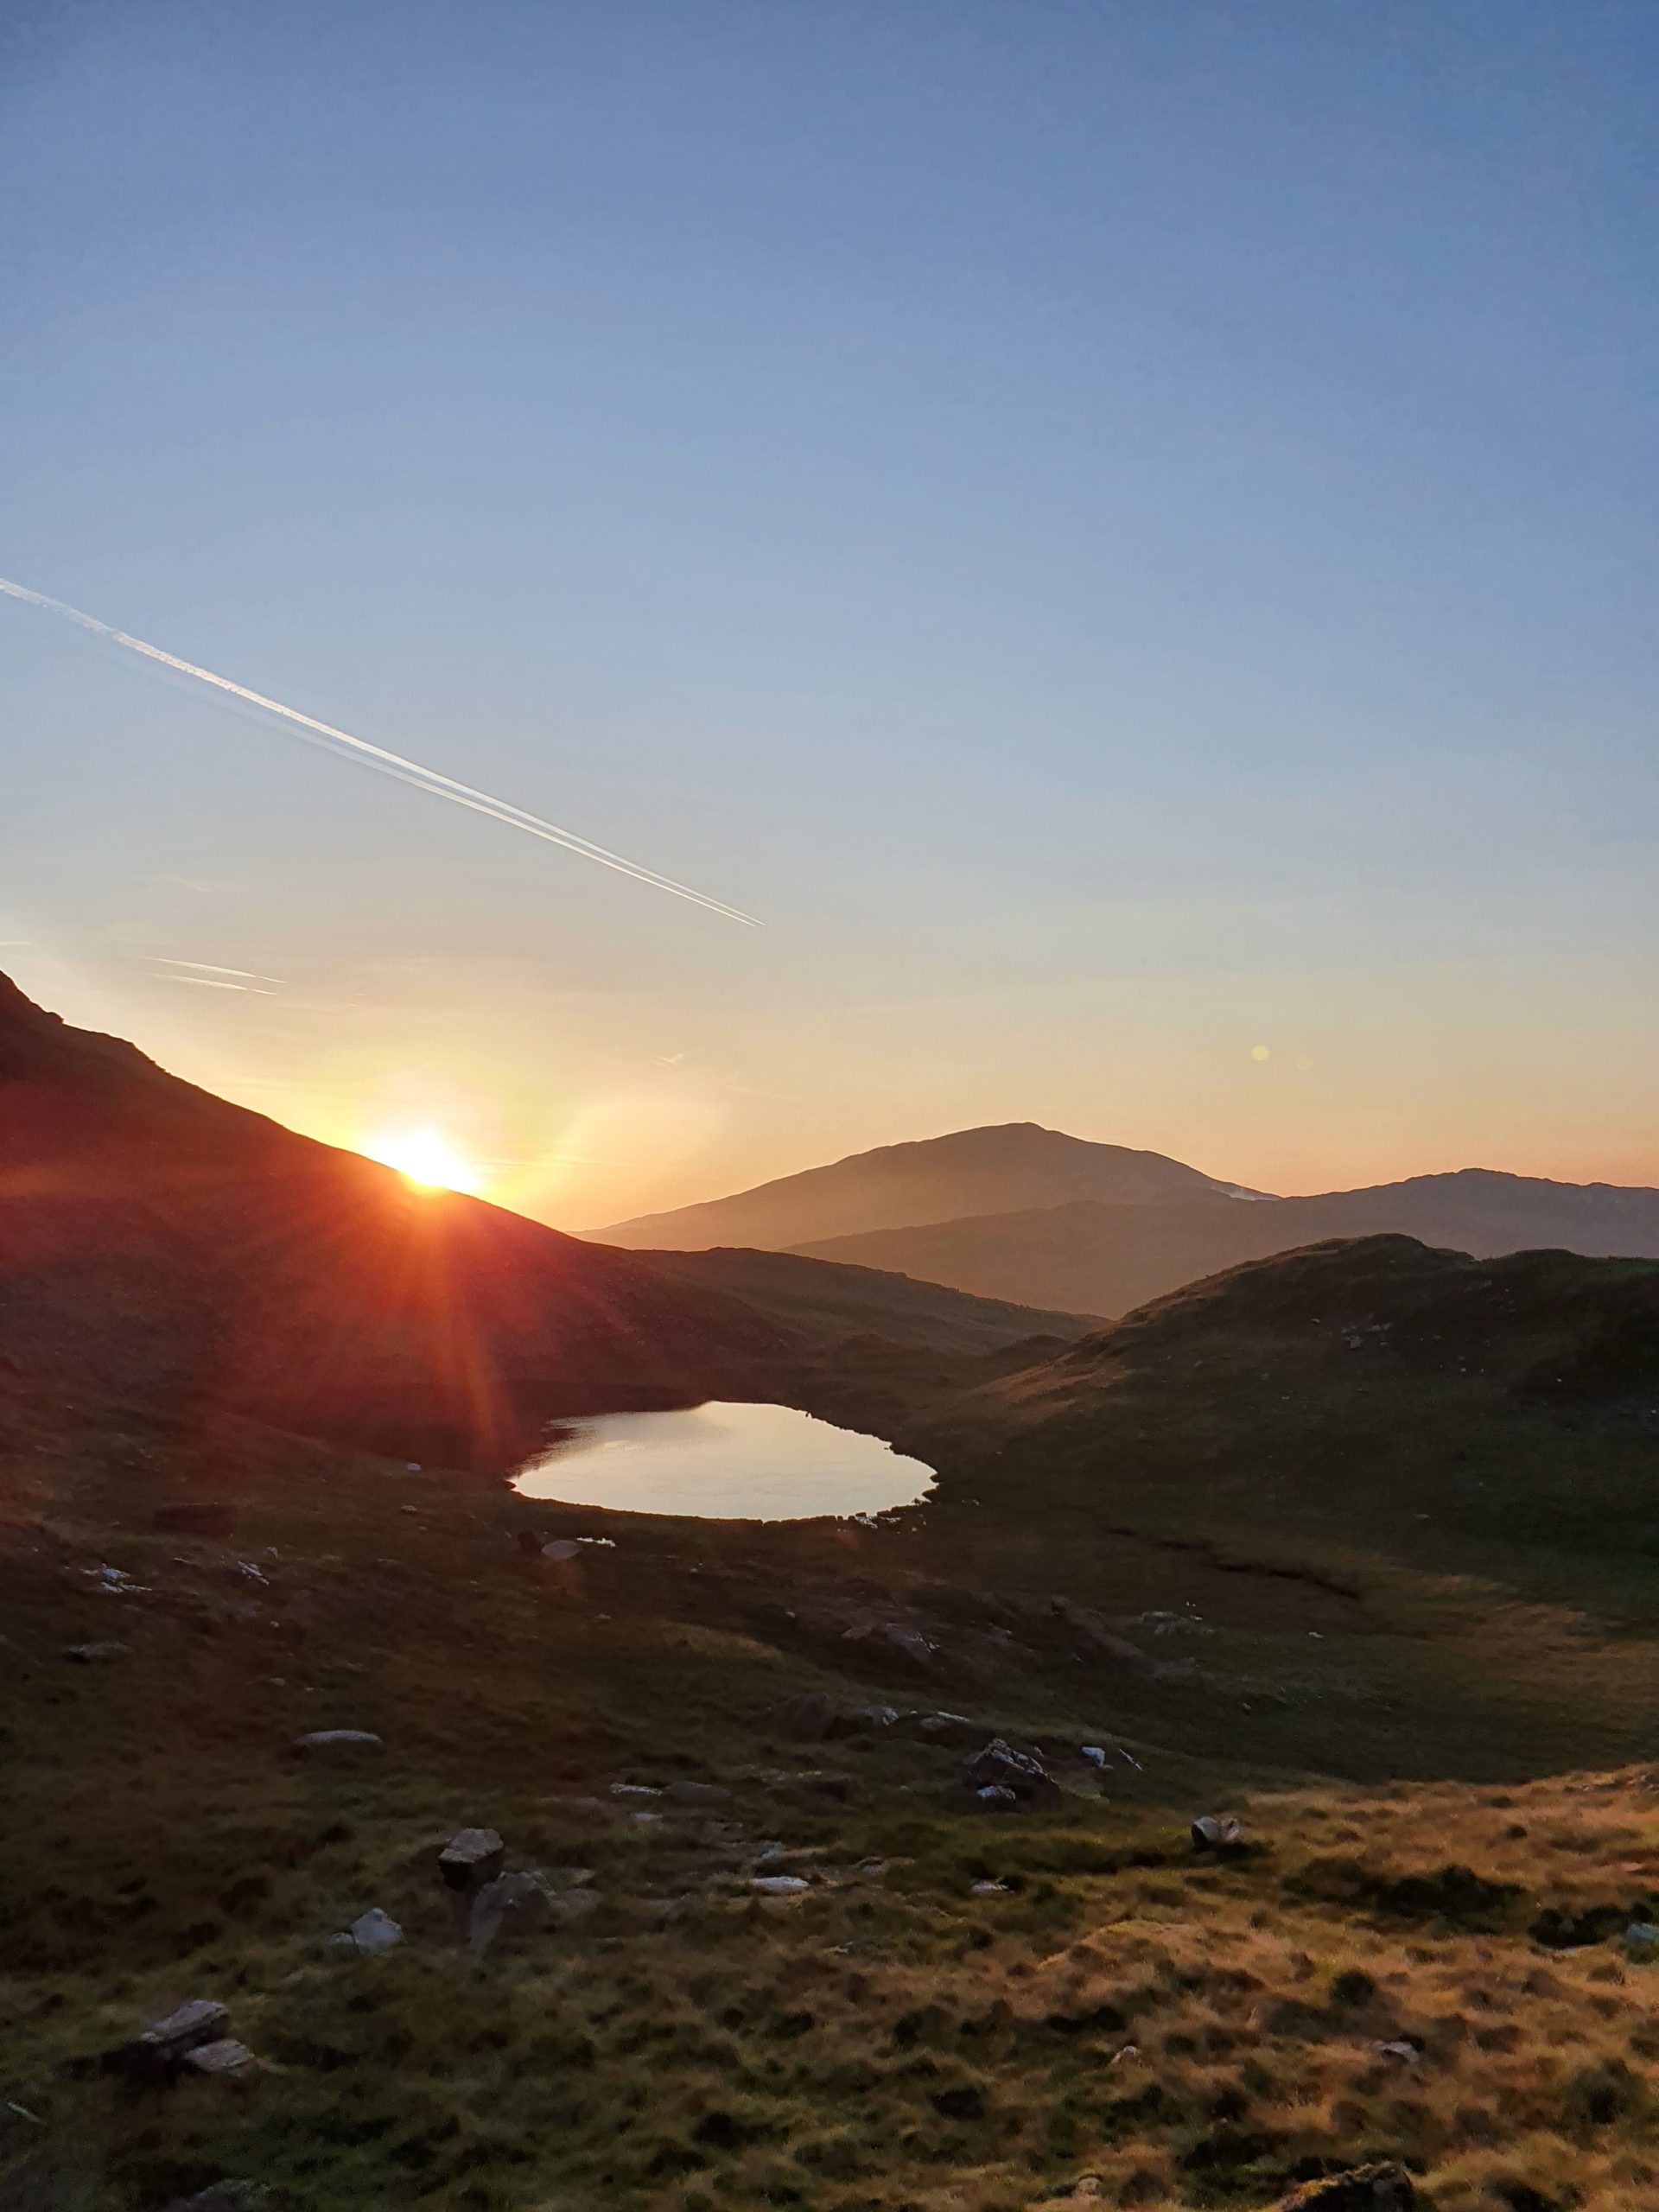 Tackling The Welsh 3 Peak Challenge